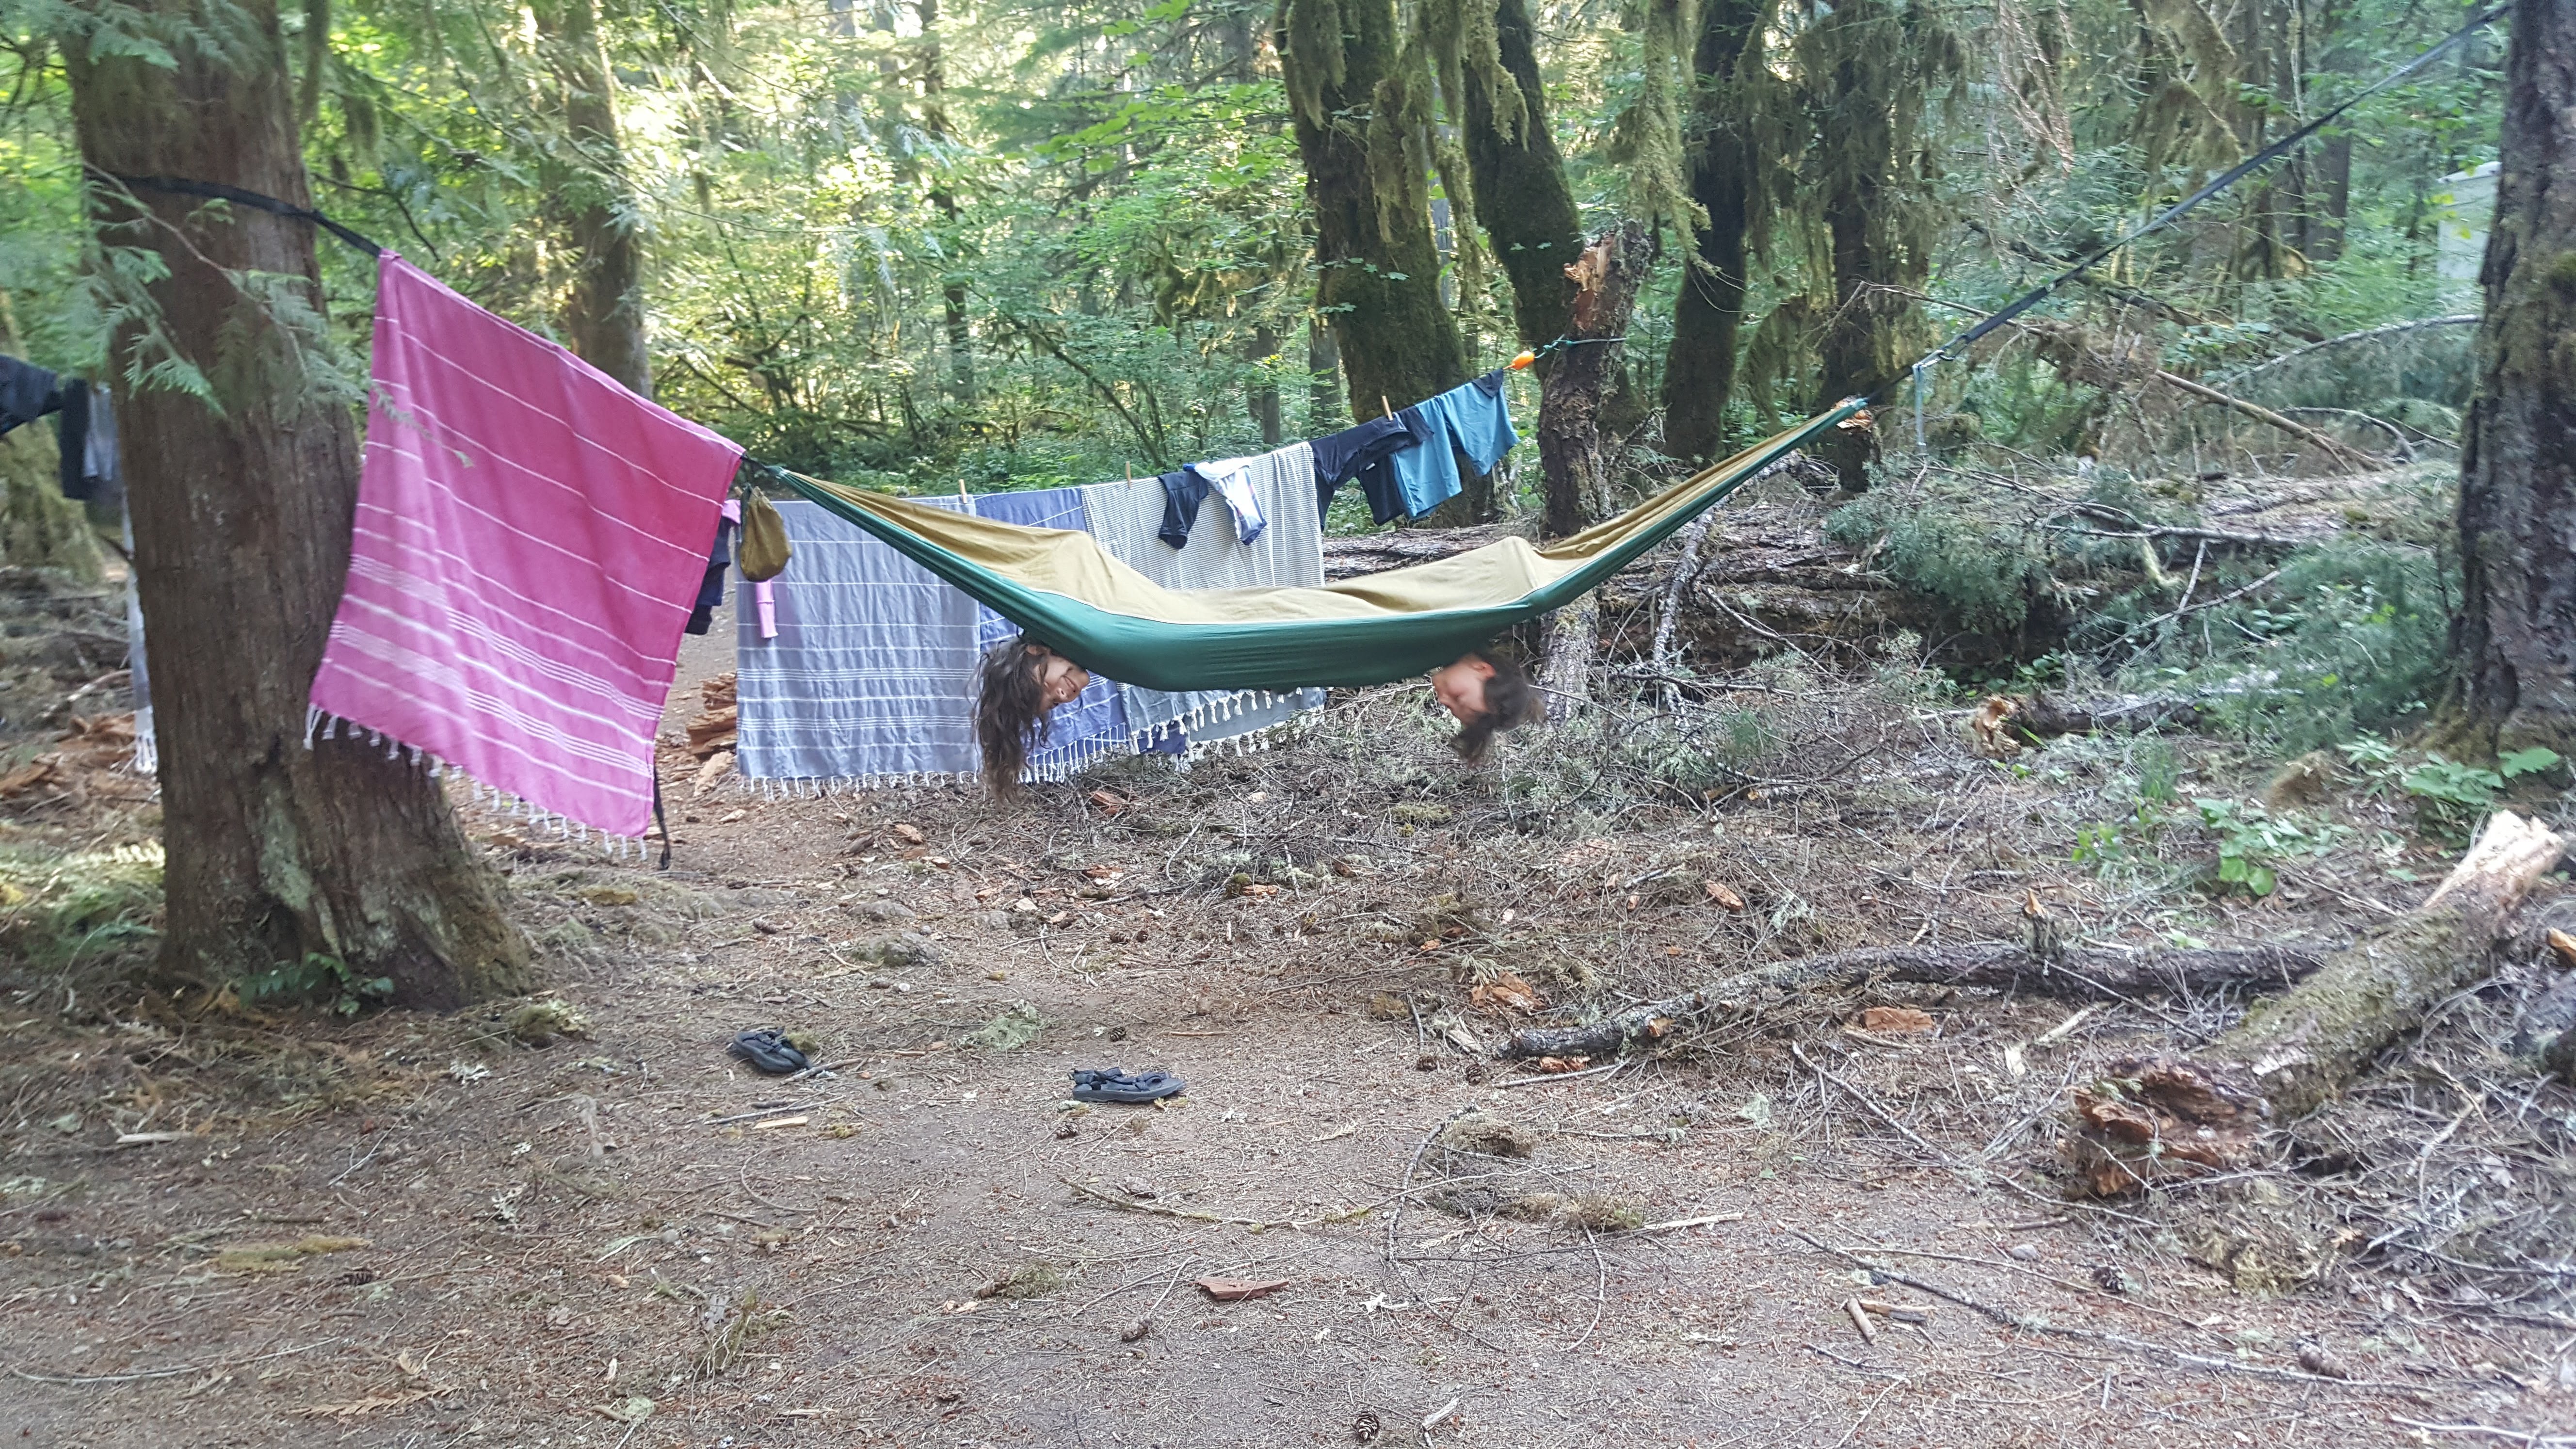 Campsites are hammock friendly